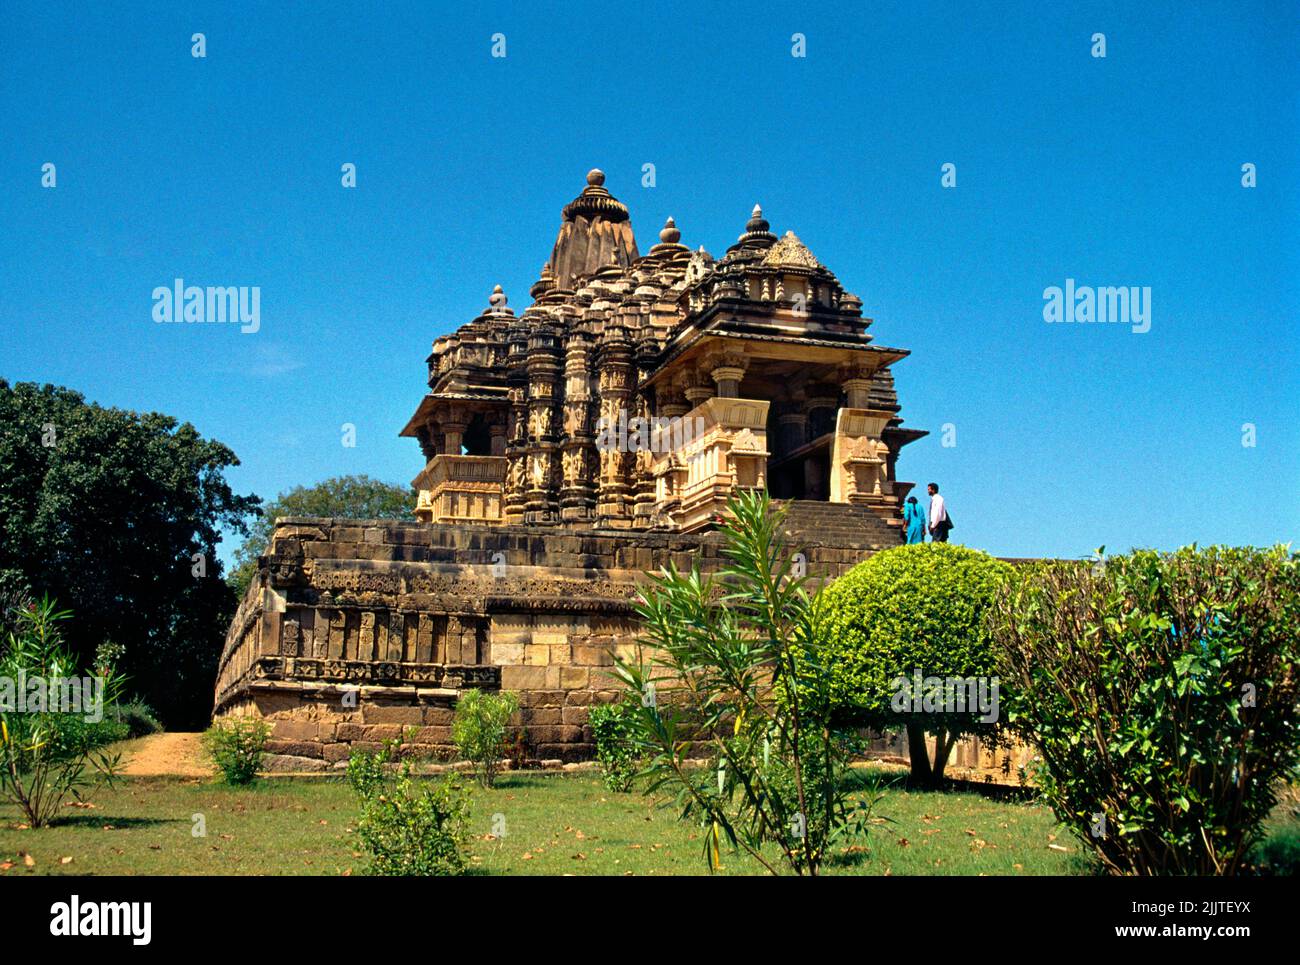 Khajuraho India Chitragupta Temple Dedicated to Sun God Surya - Nagara Style from Chola Period 11th Century UNESCO World Heritage Site Stock Photo